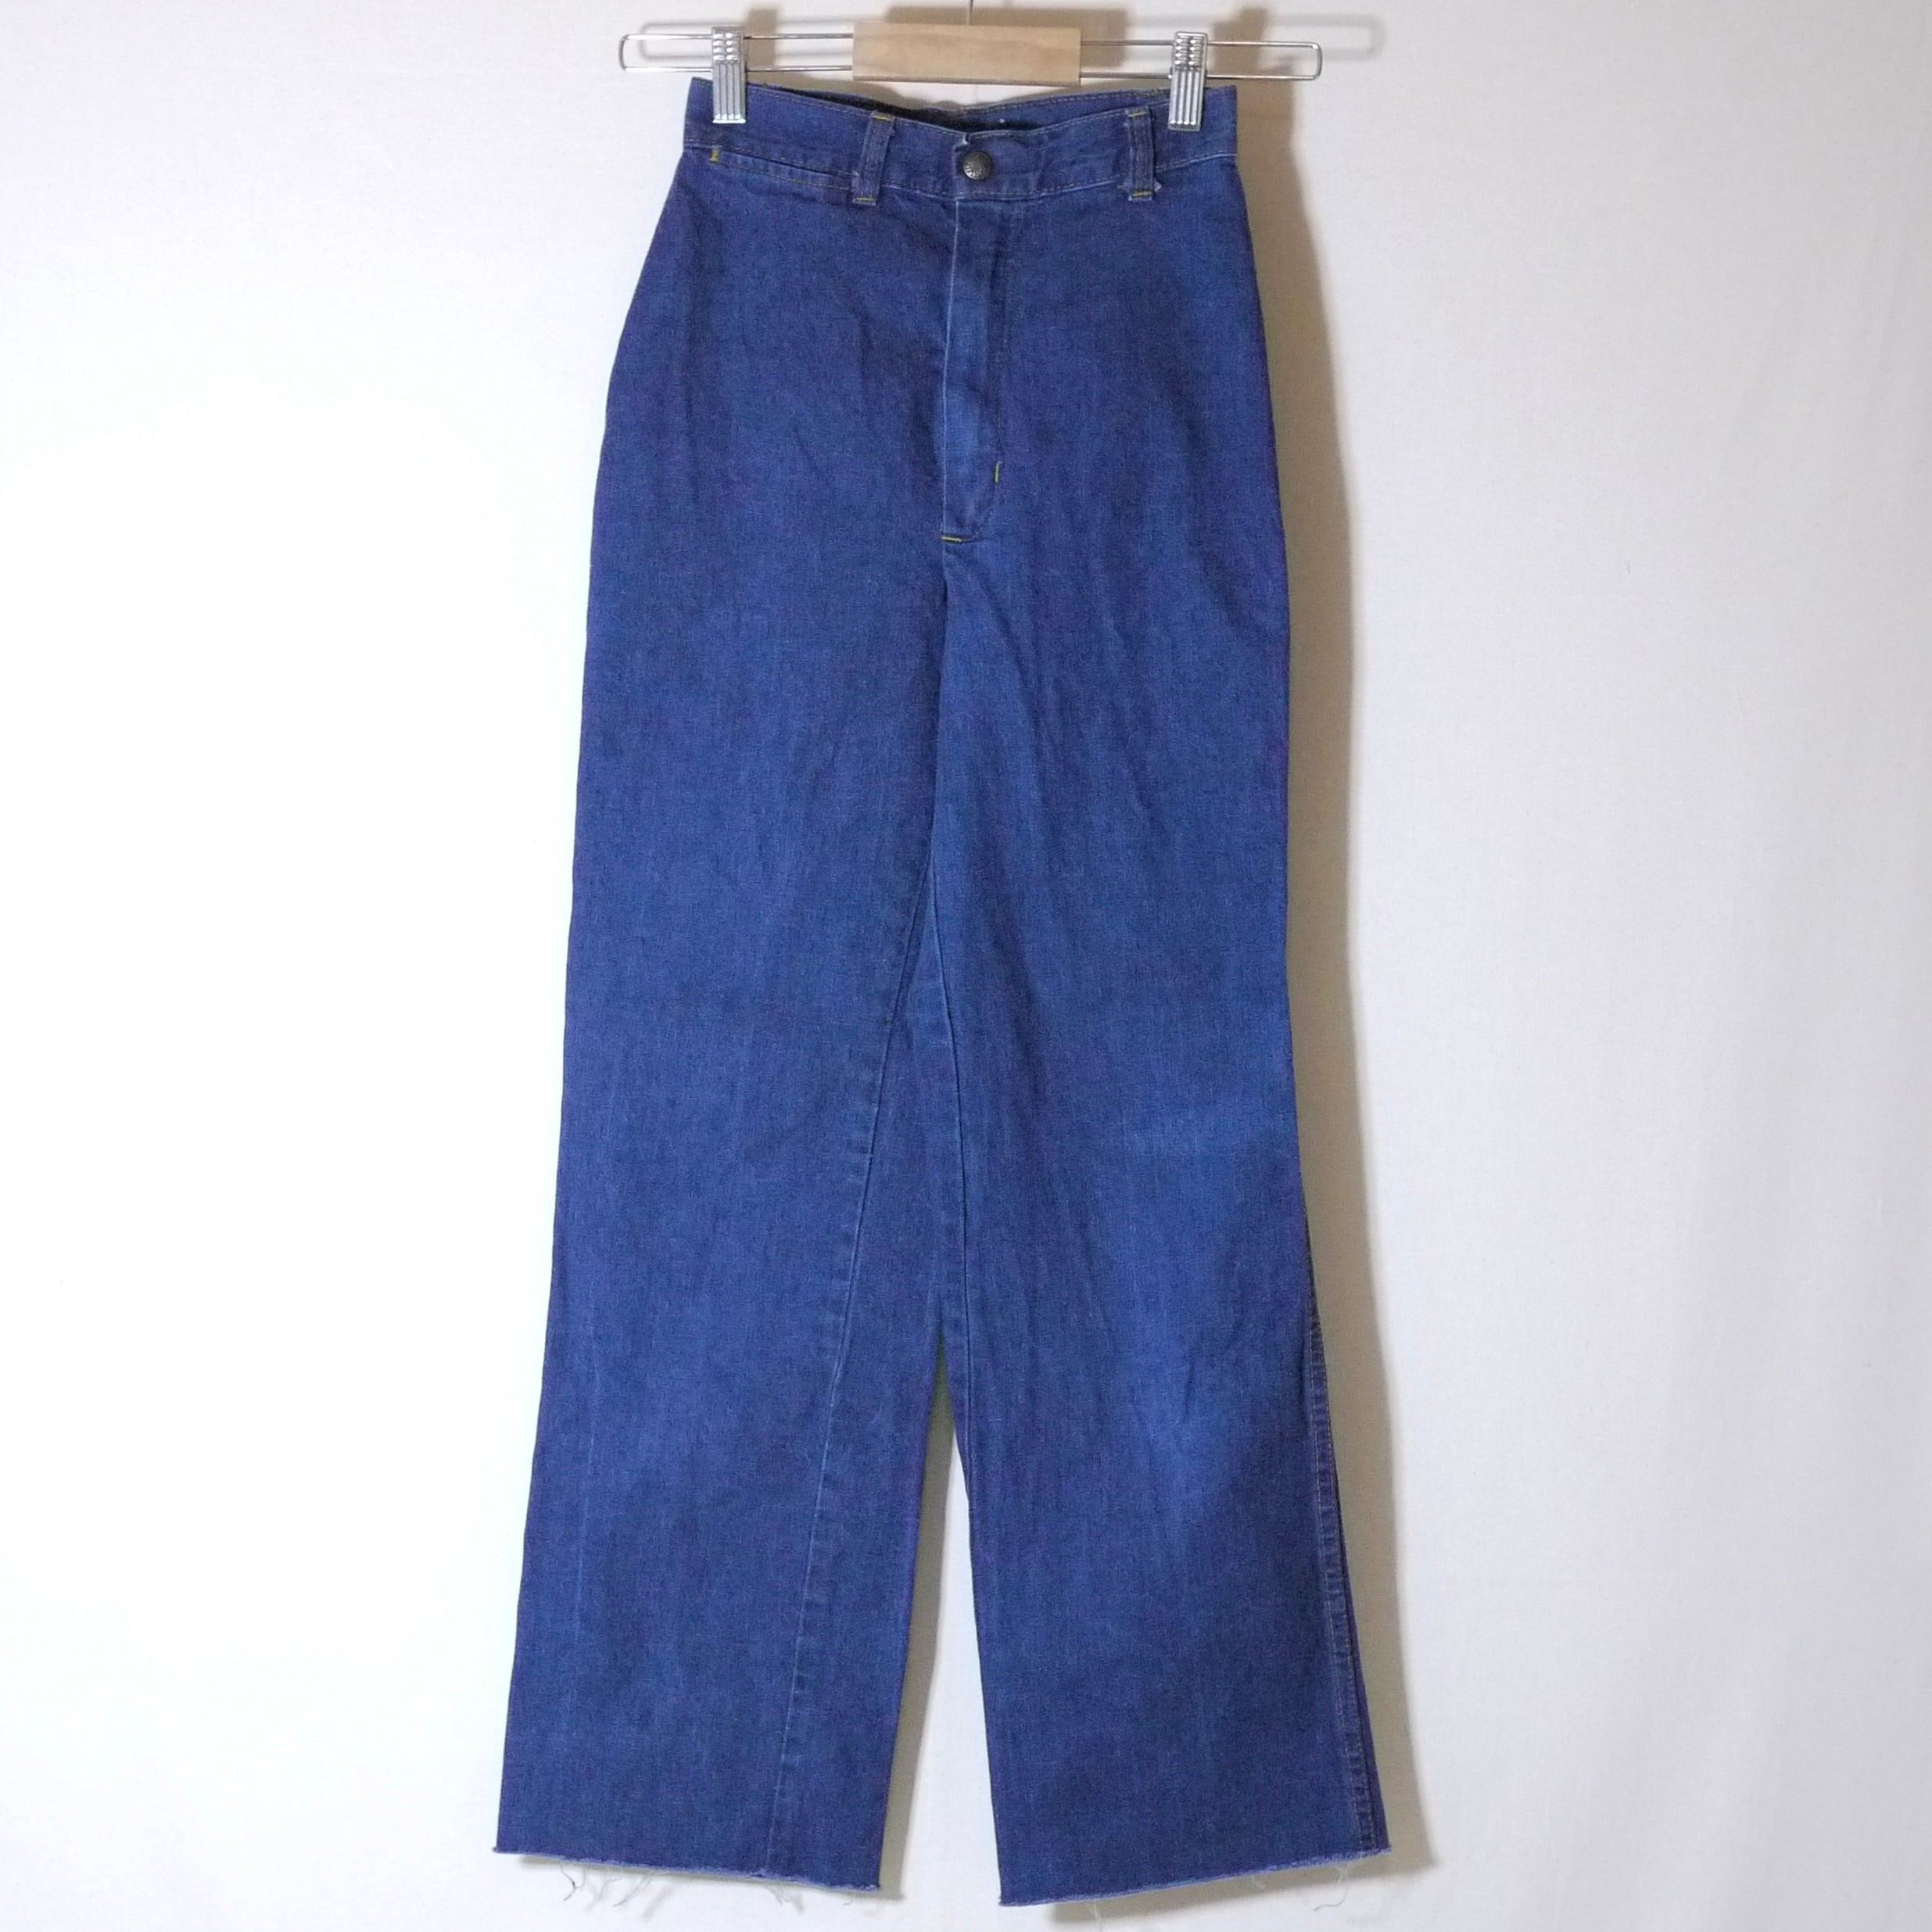 JC Penney 1970's Flare Denim pants Size3